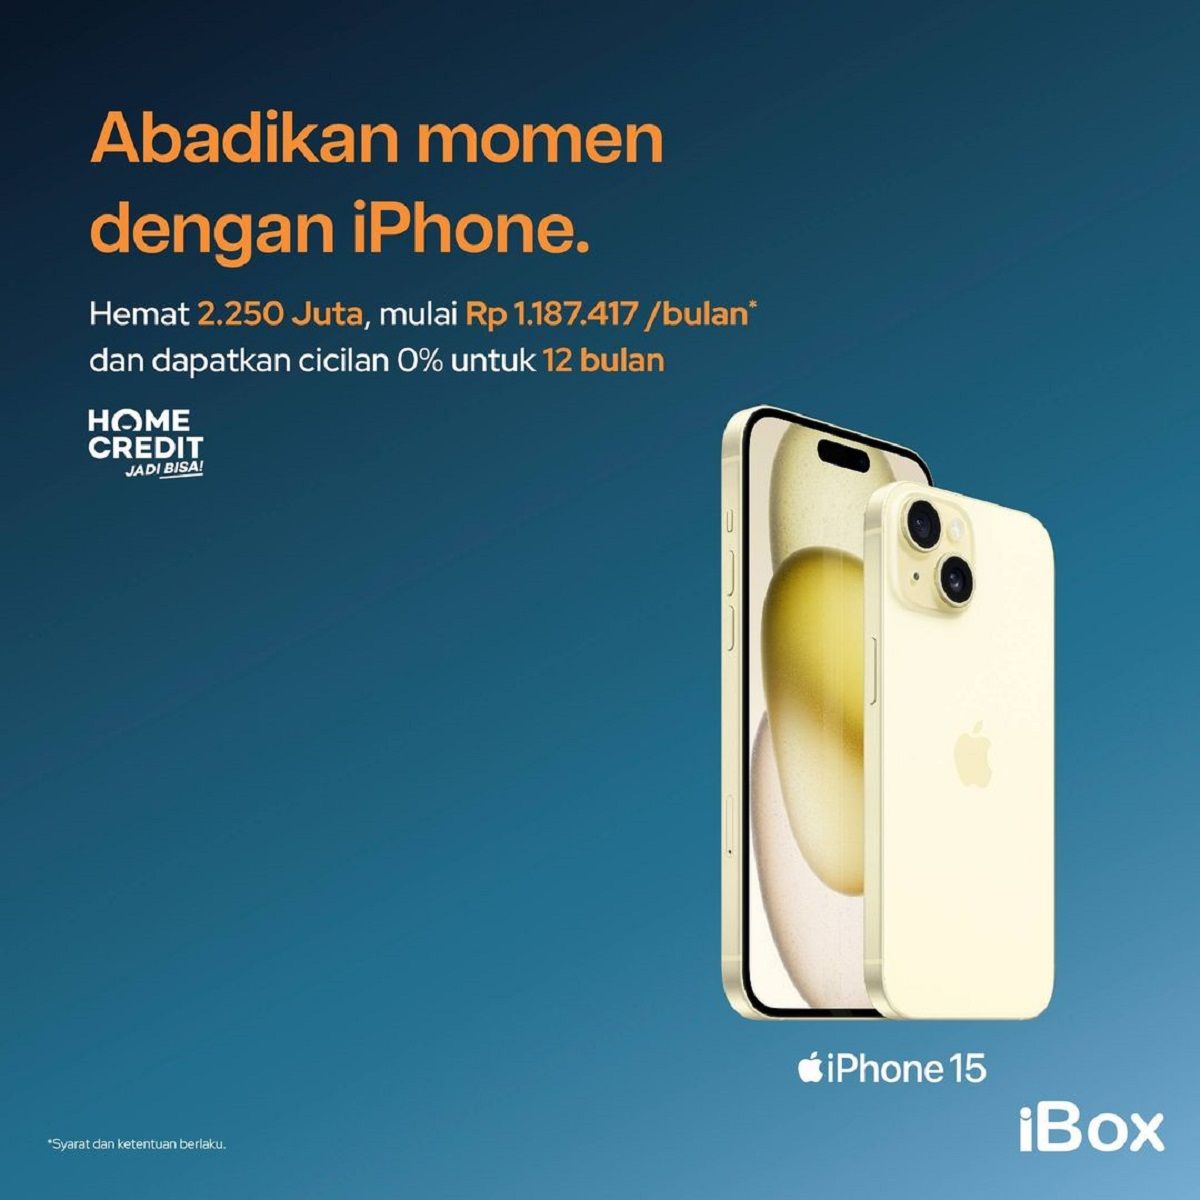 Hemat hingga Rp 2.250.000 dengan cicilan ringan Rp 1 jutaan. Promo iPhone 15 di iBox Surabaya: iPhone terbaru, cicilan 0%, hemat jutaan Rek! / Instagram @iboxindonesia